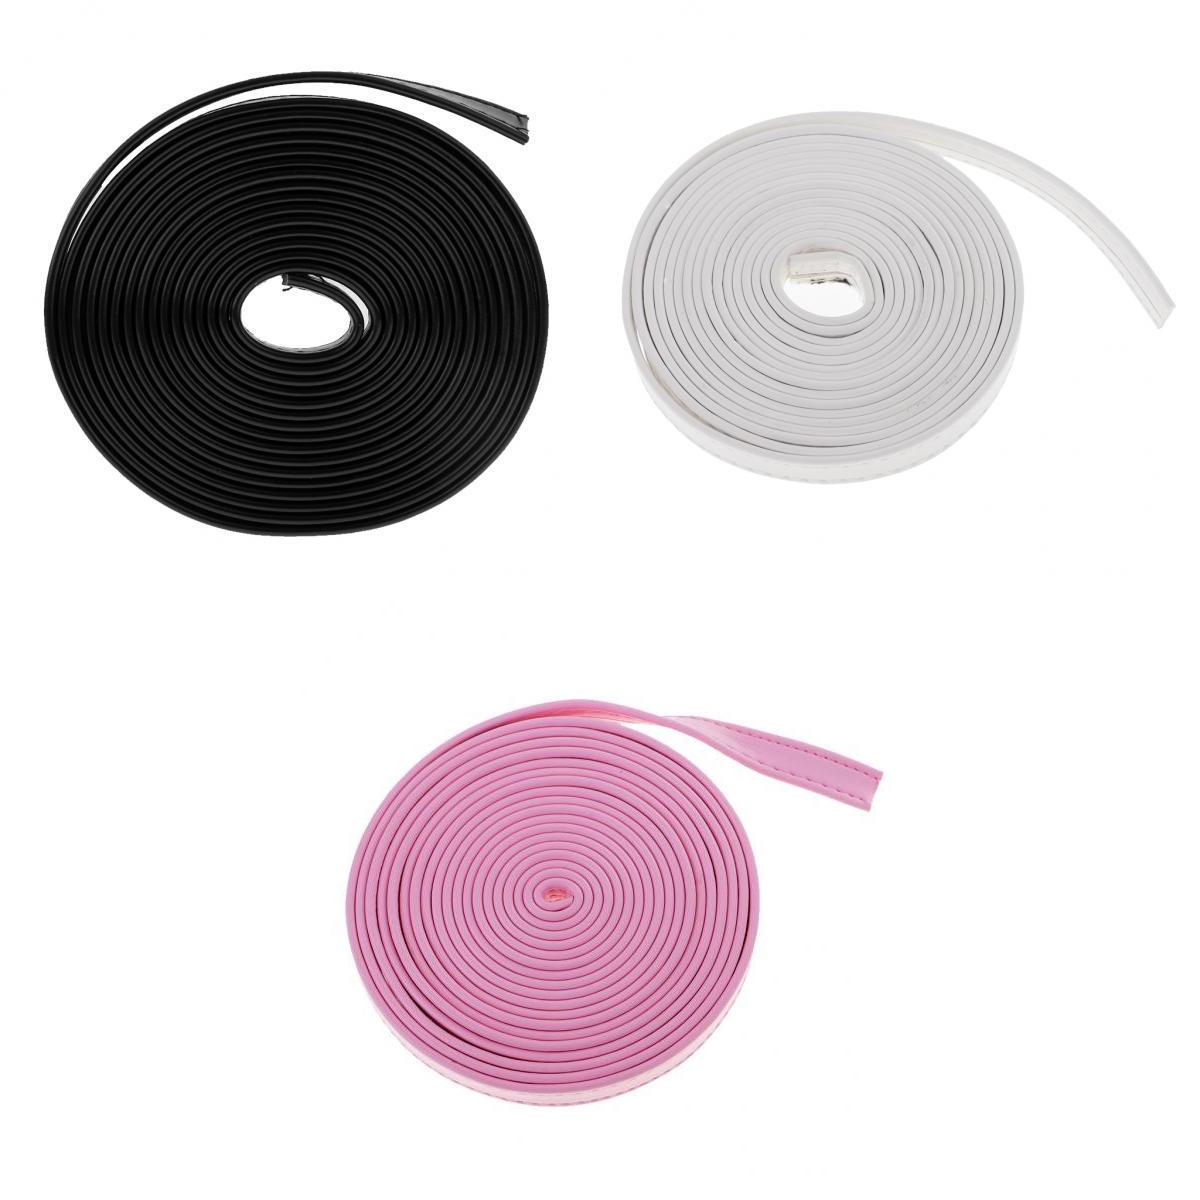 9M Craft Pu Strips Riem Riem 12Mm Voor Kledingstuk Accessoires Wit/Zwart/Roze